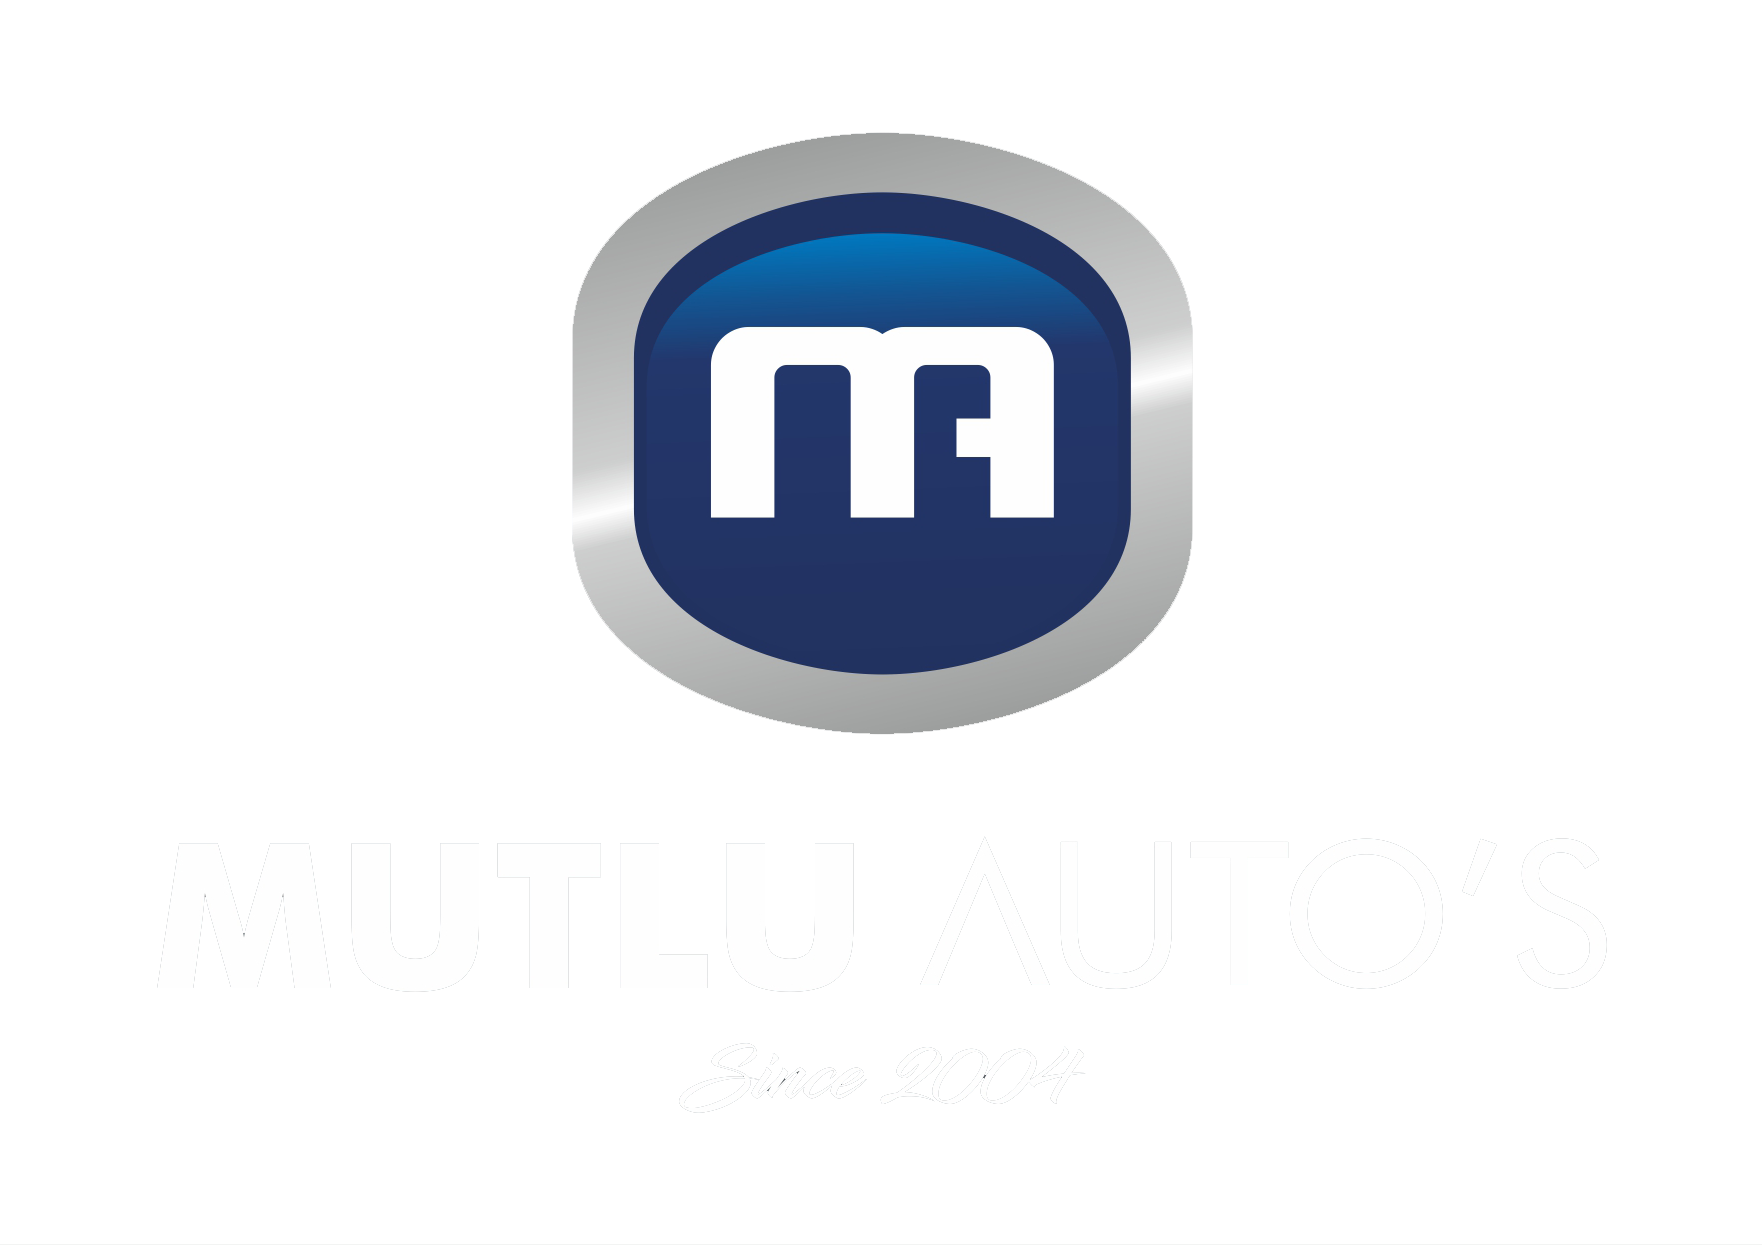 Mutlu Auto's logo